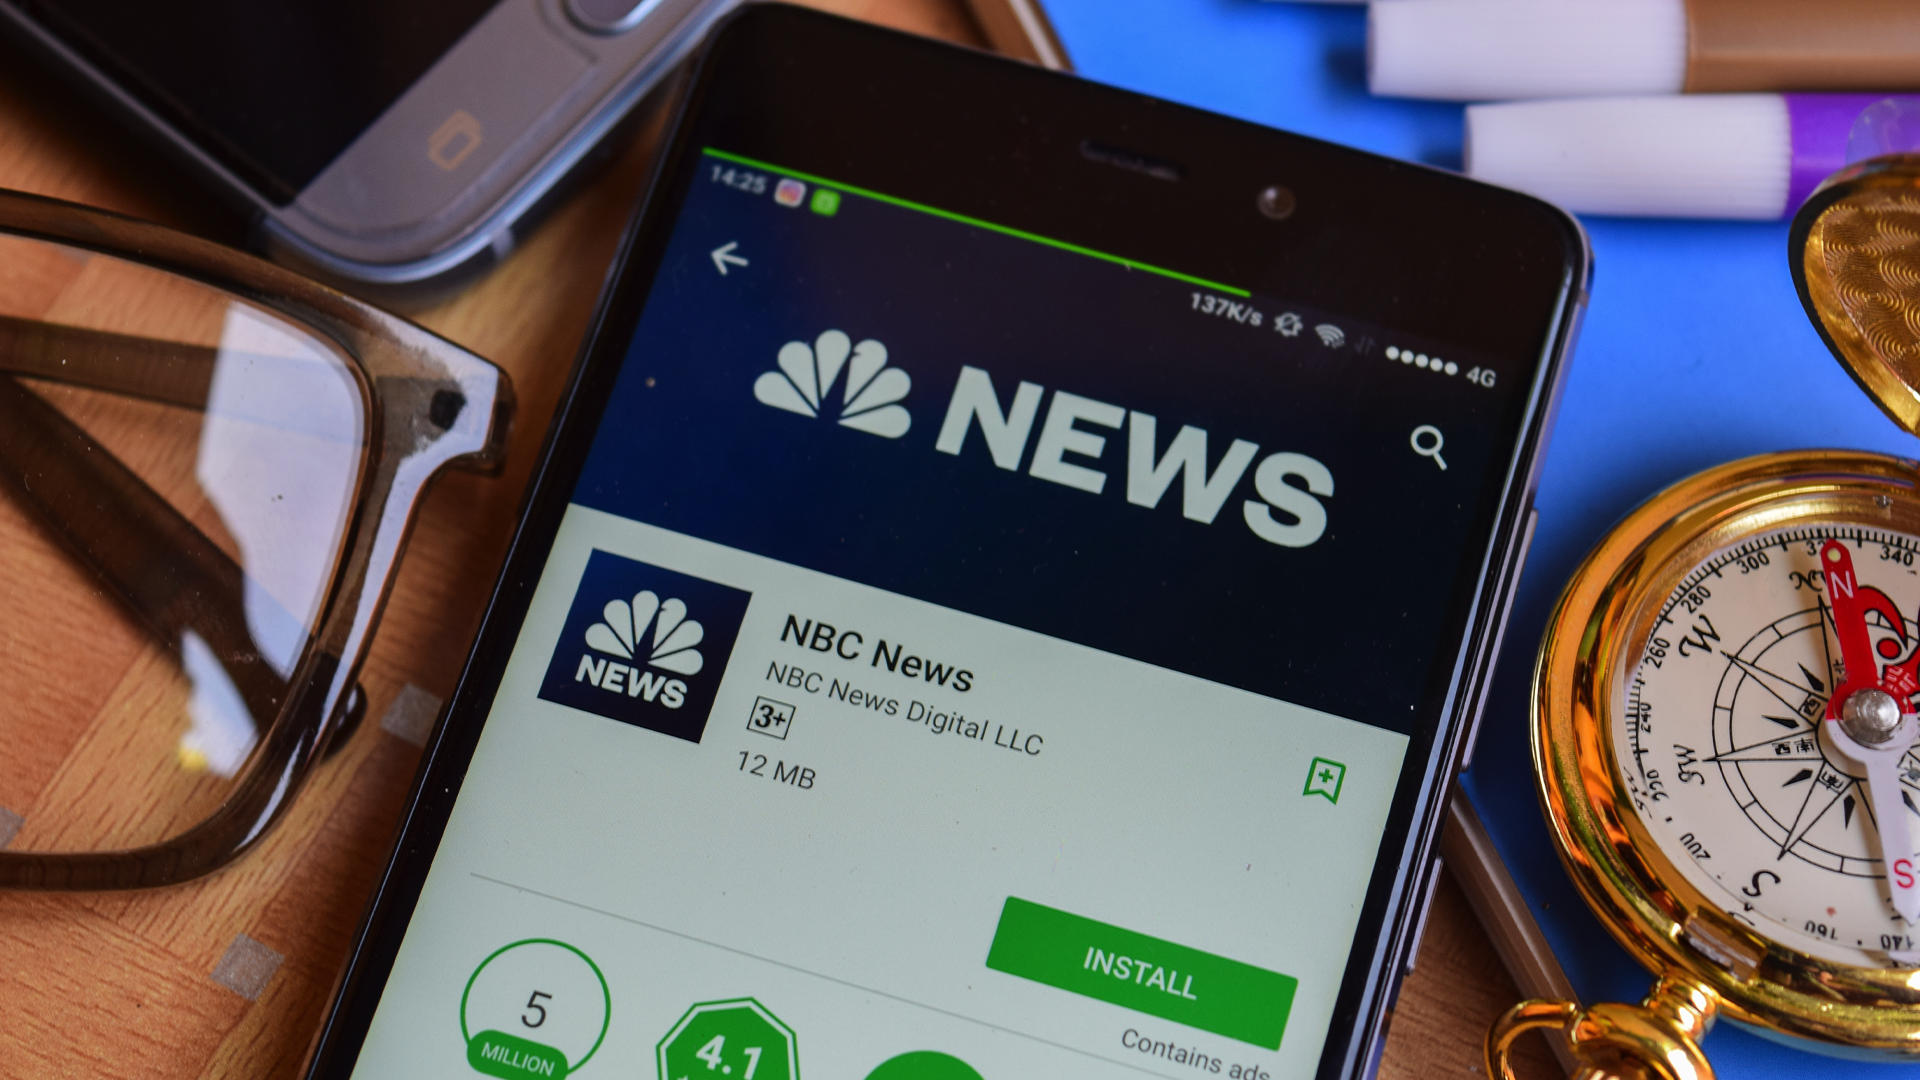 The NBC news app on a smartphone.